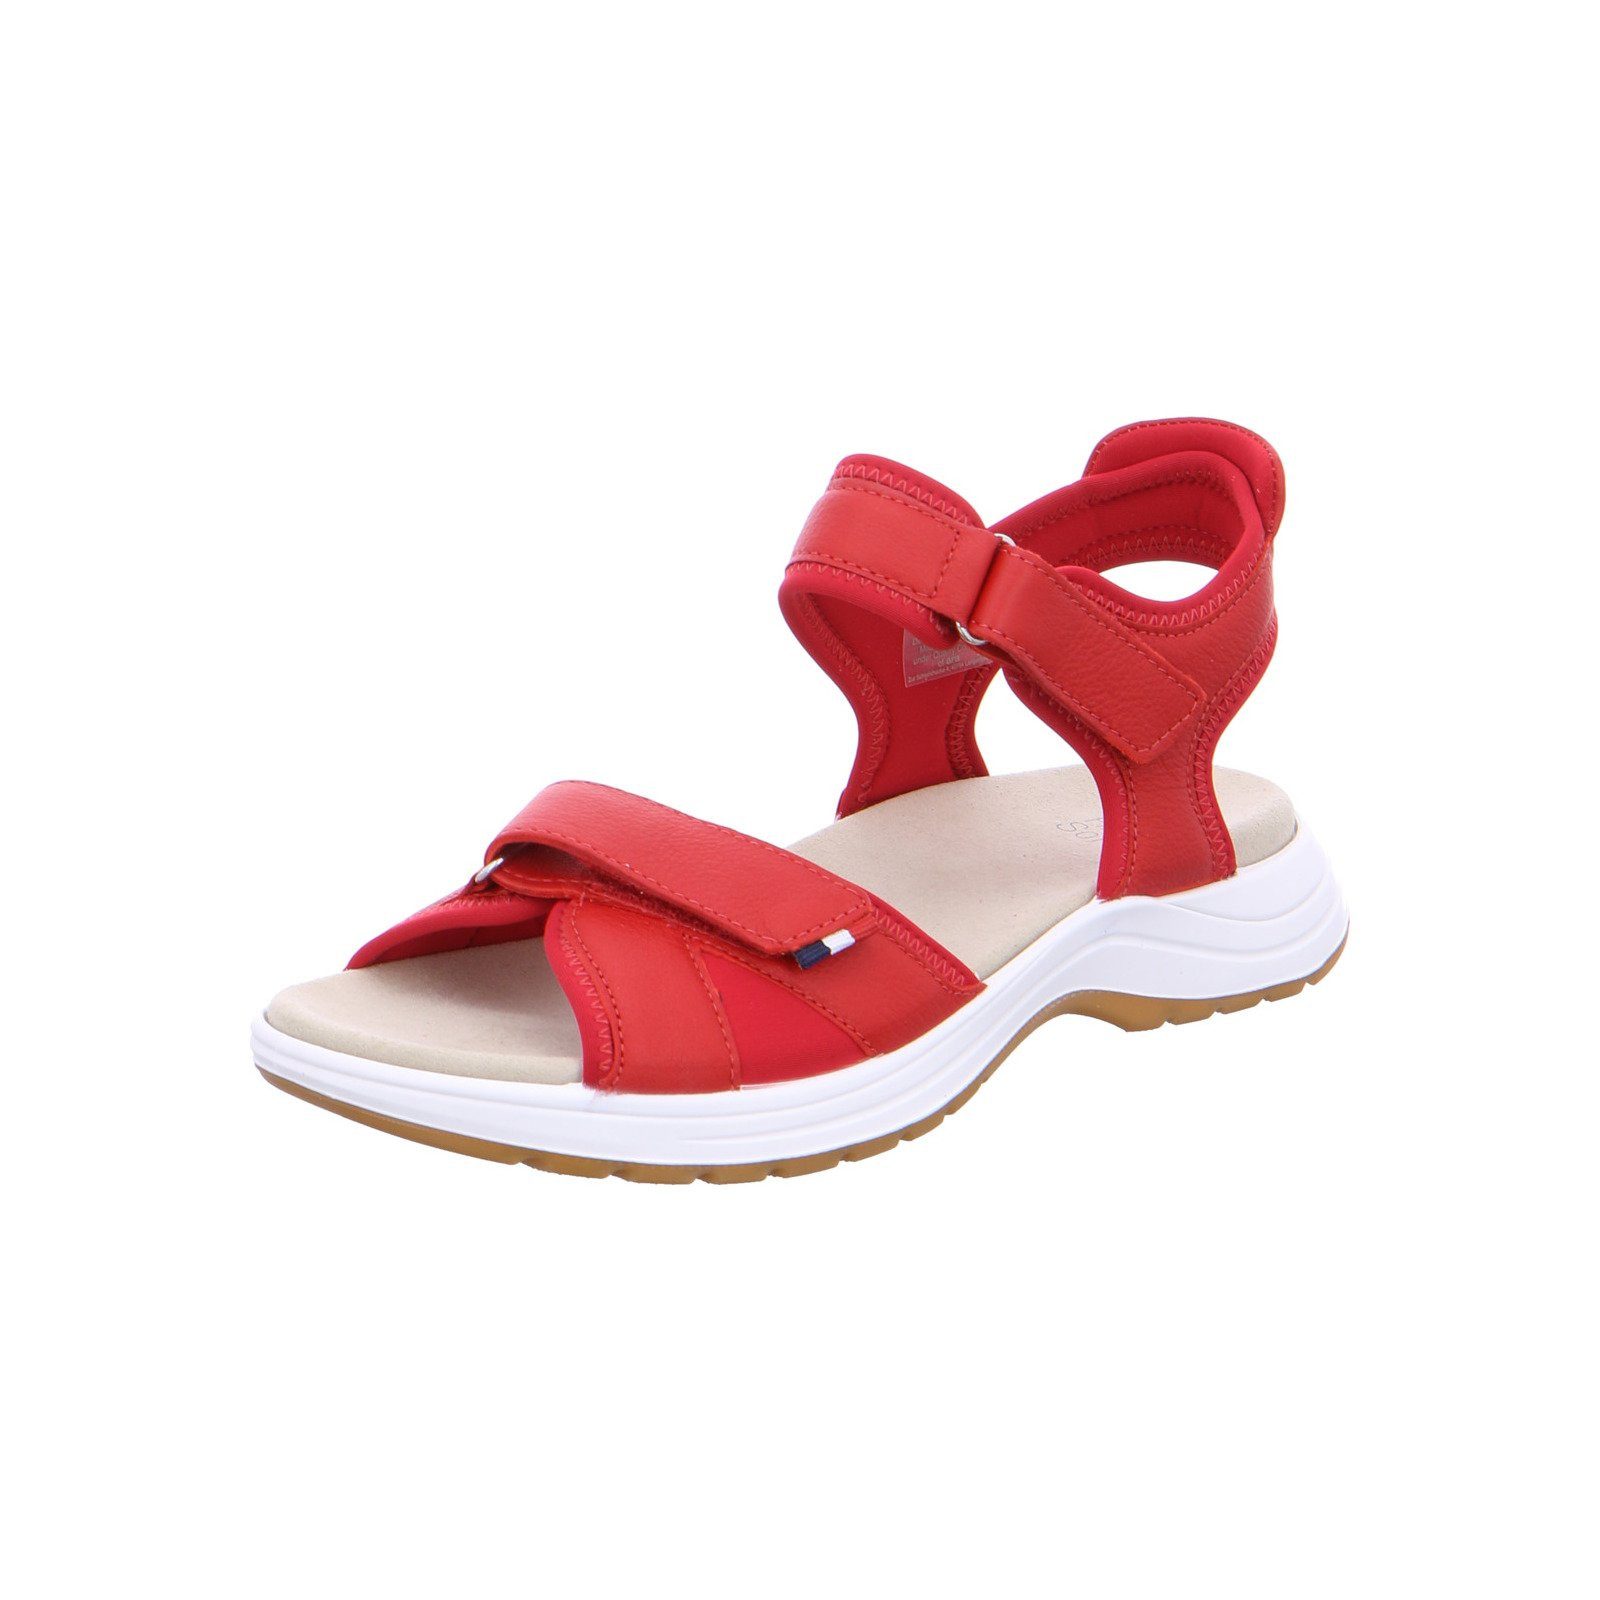 Ara Panama - Damen Schuhe Sandalette Glattleder rot